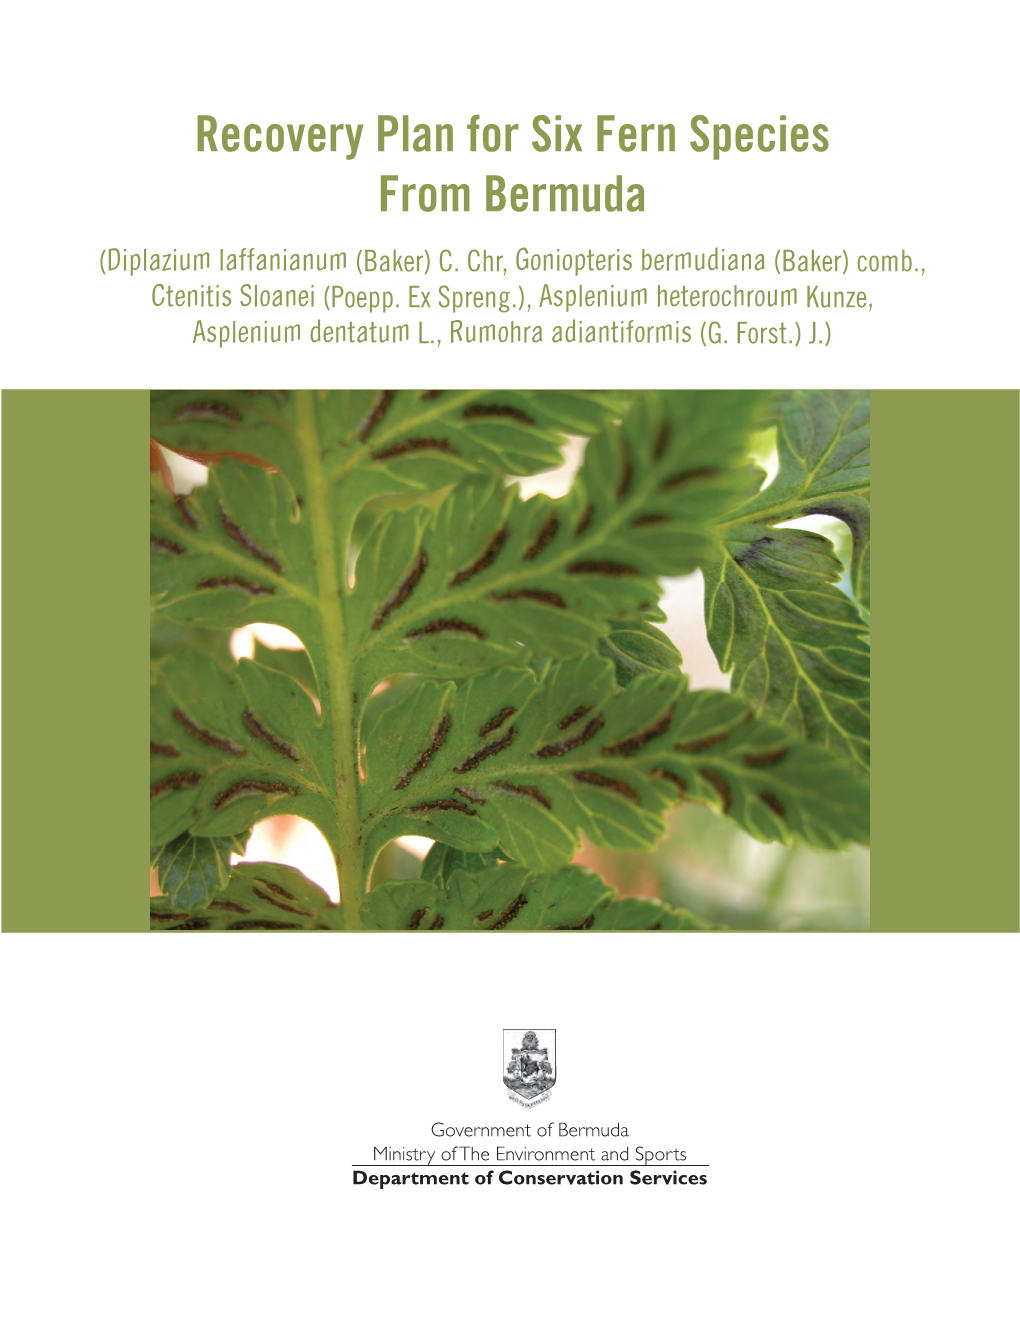 Recovery Plan for Six Fern Species from Bermuda (Diplazium Laffanianum (Baker) C